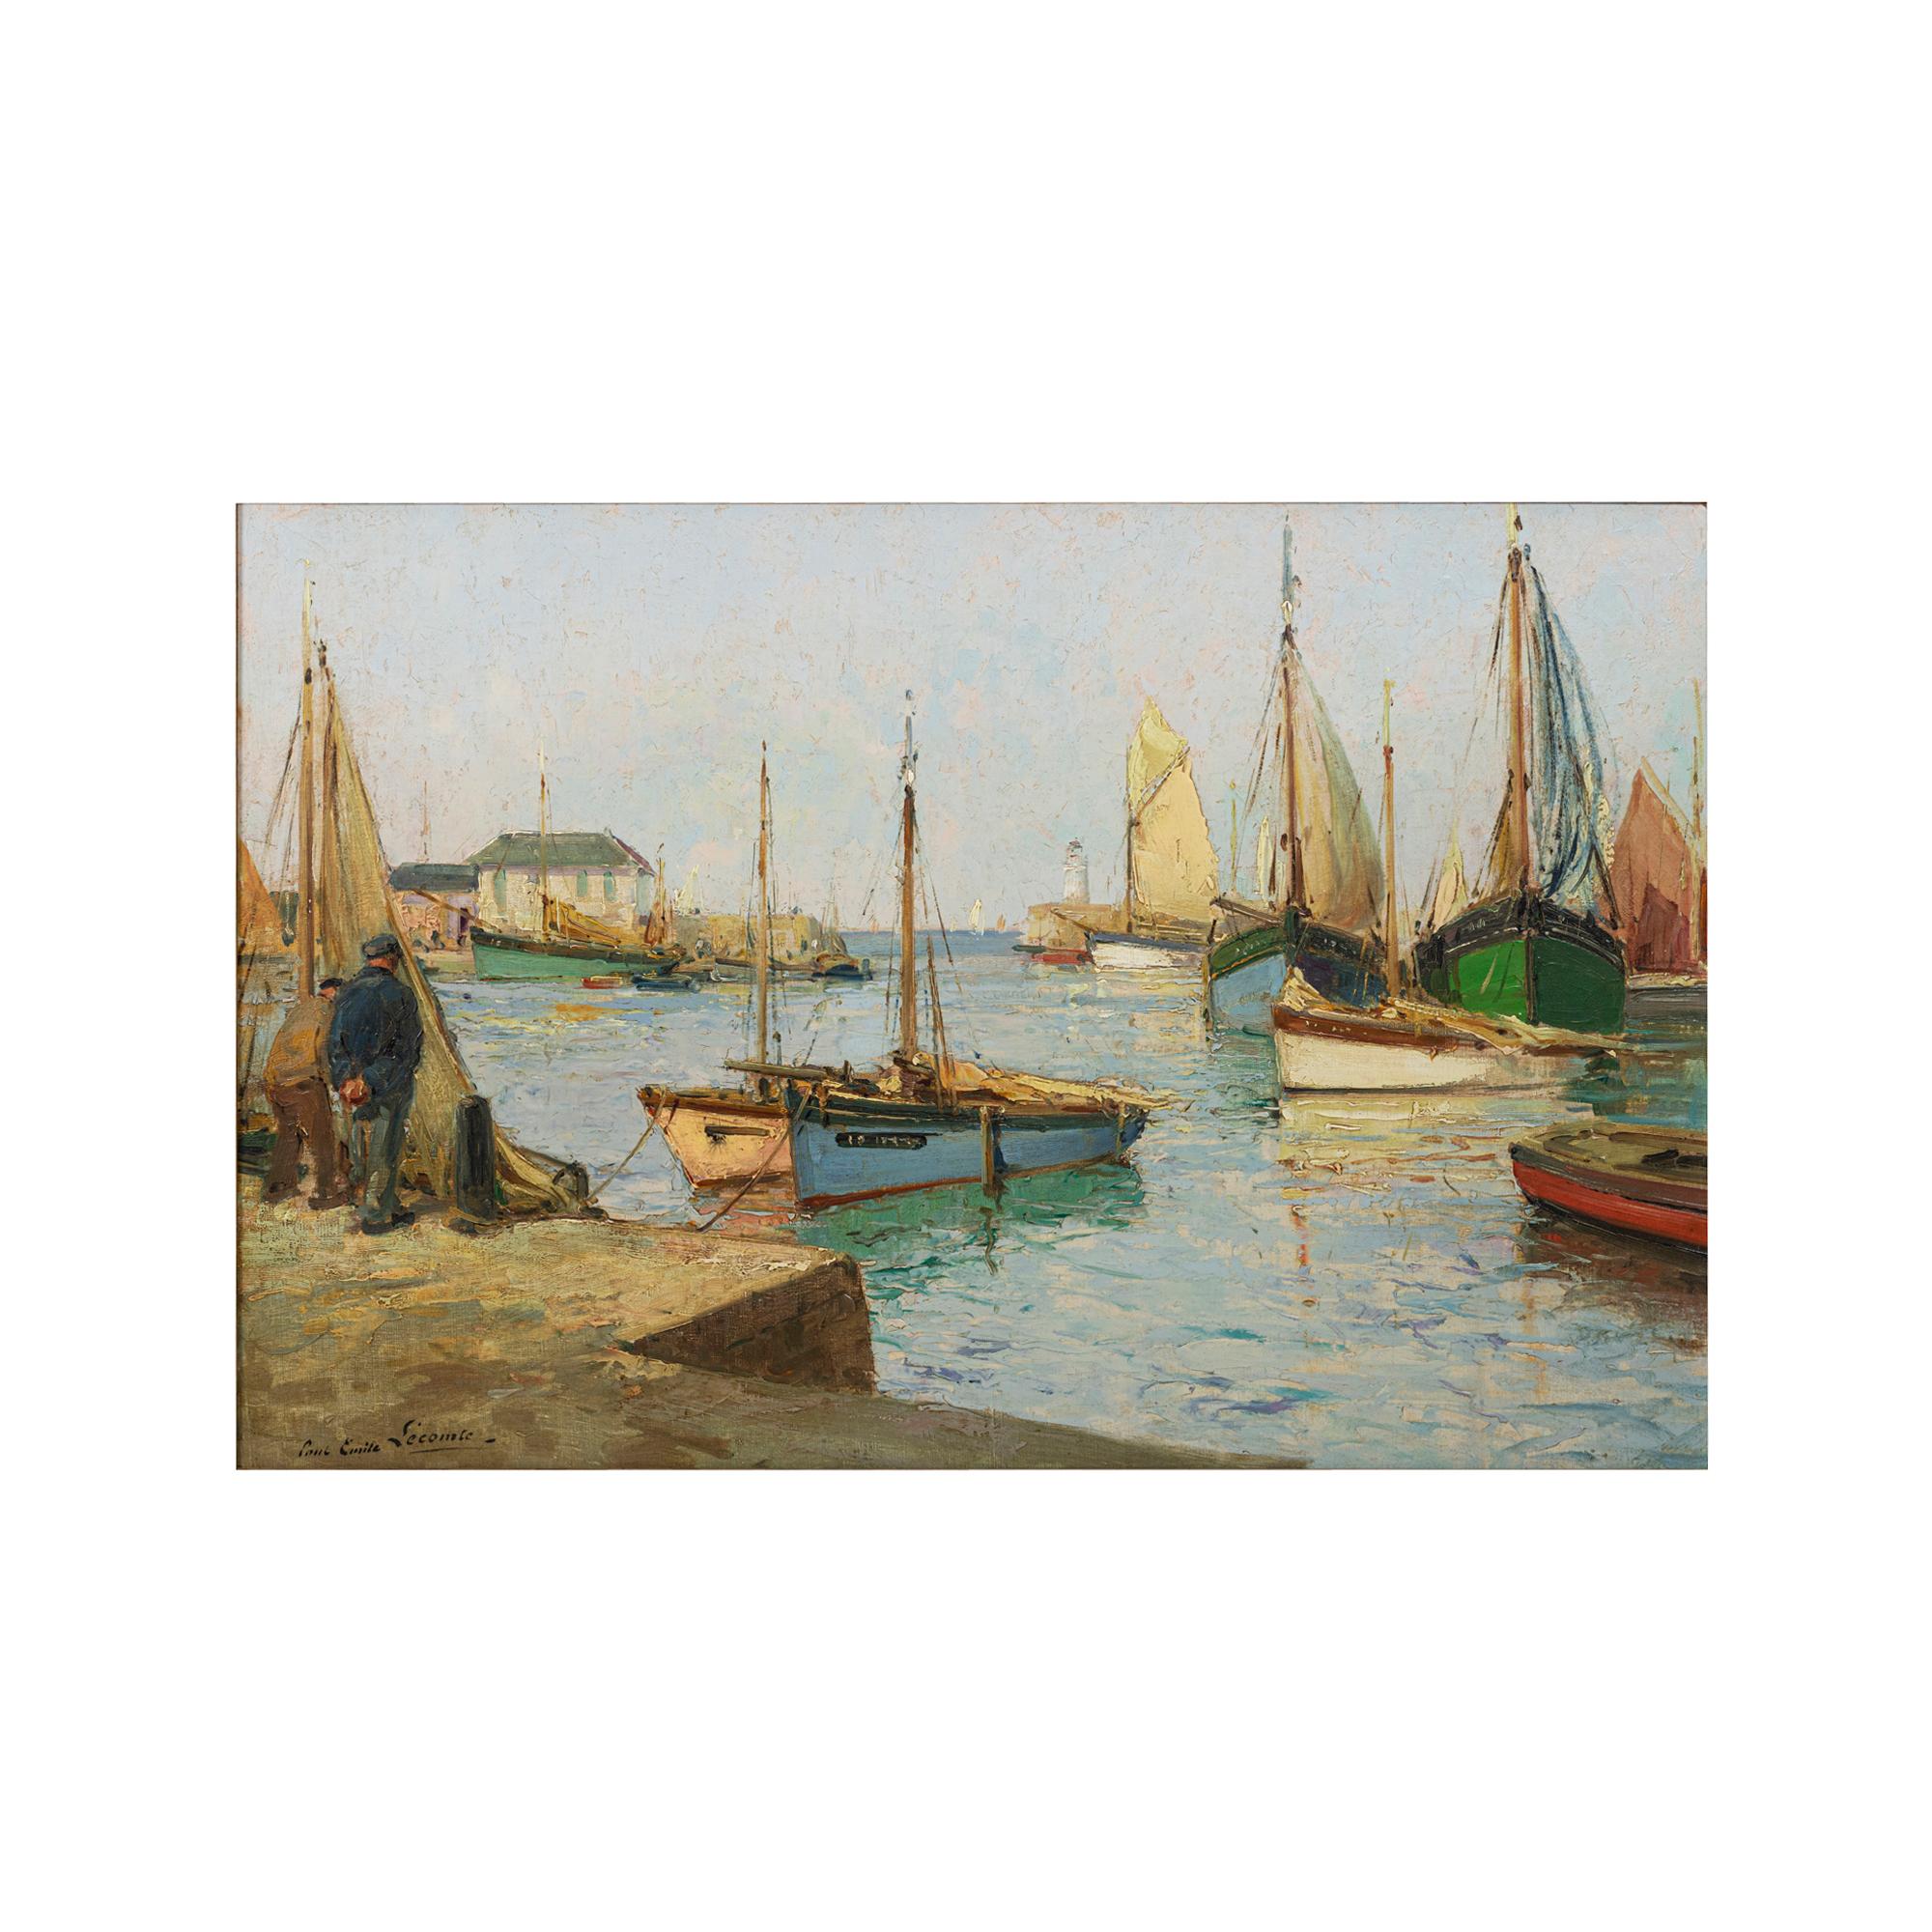 Paul Emile Lecomte 1877-1950
Oil on canvas. 
